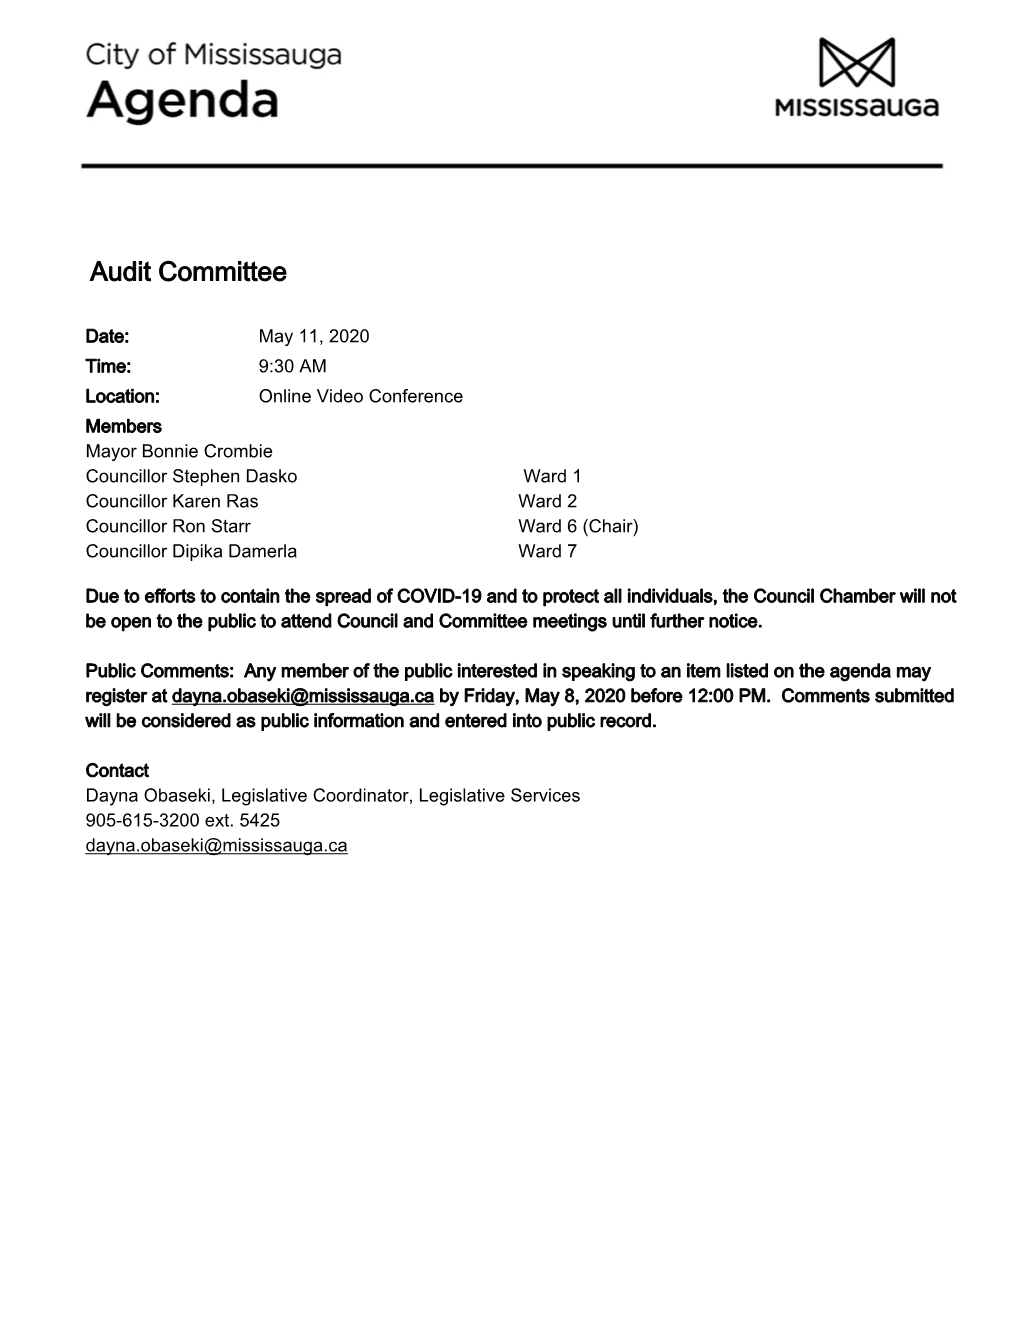 Audit Committee Agenda